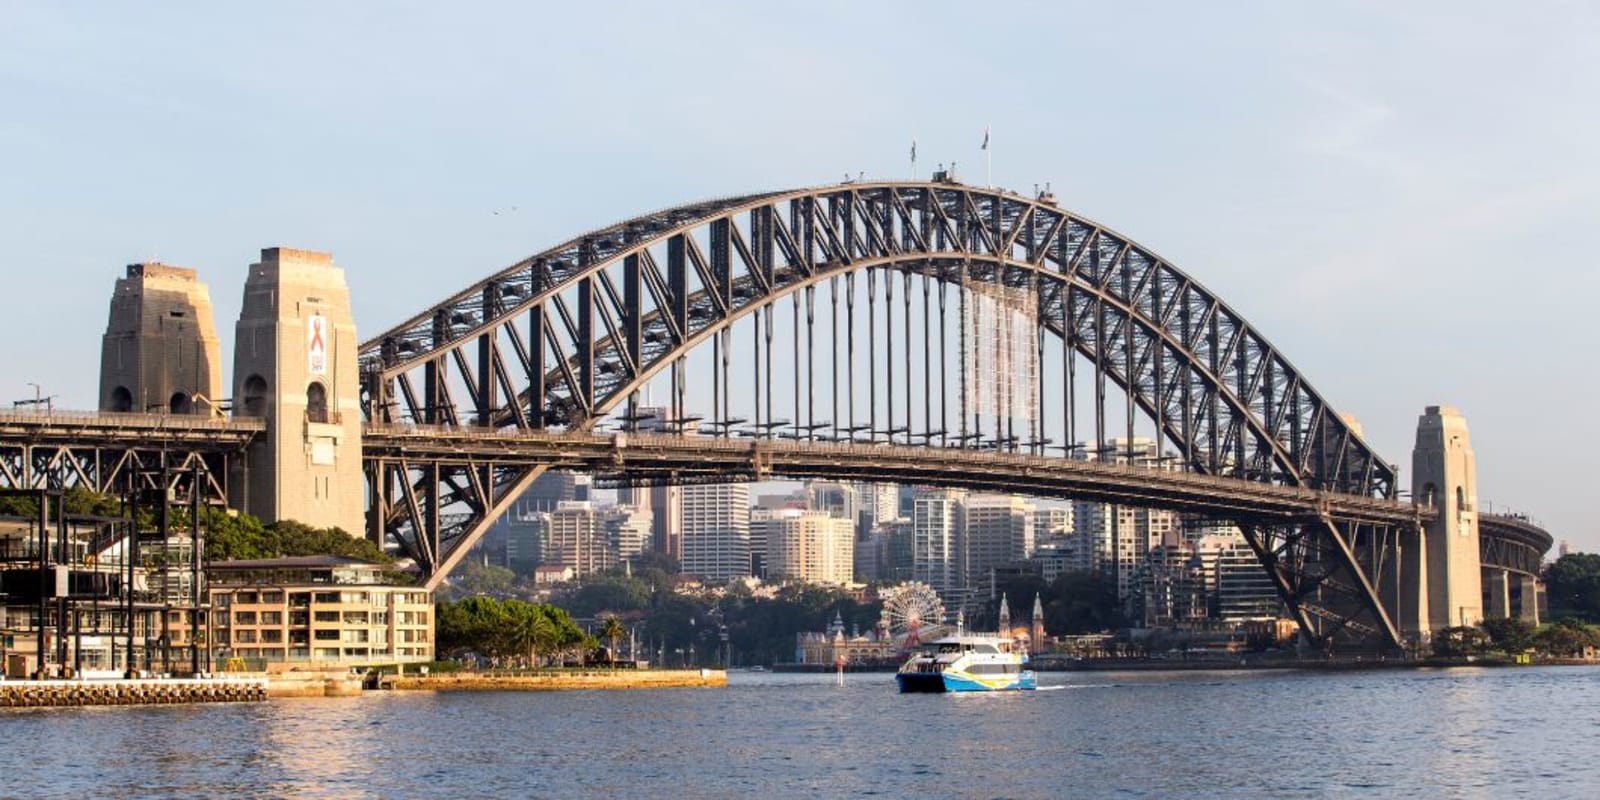 Sydney Harbour Bridge with boats sailing underneath